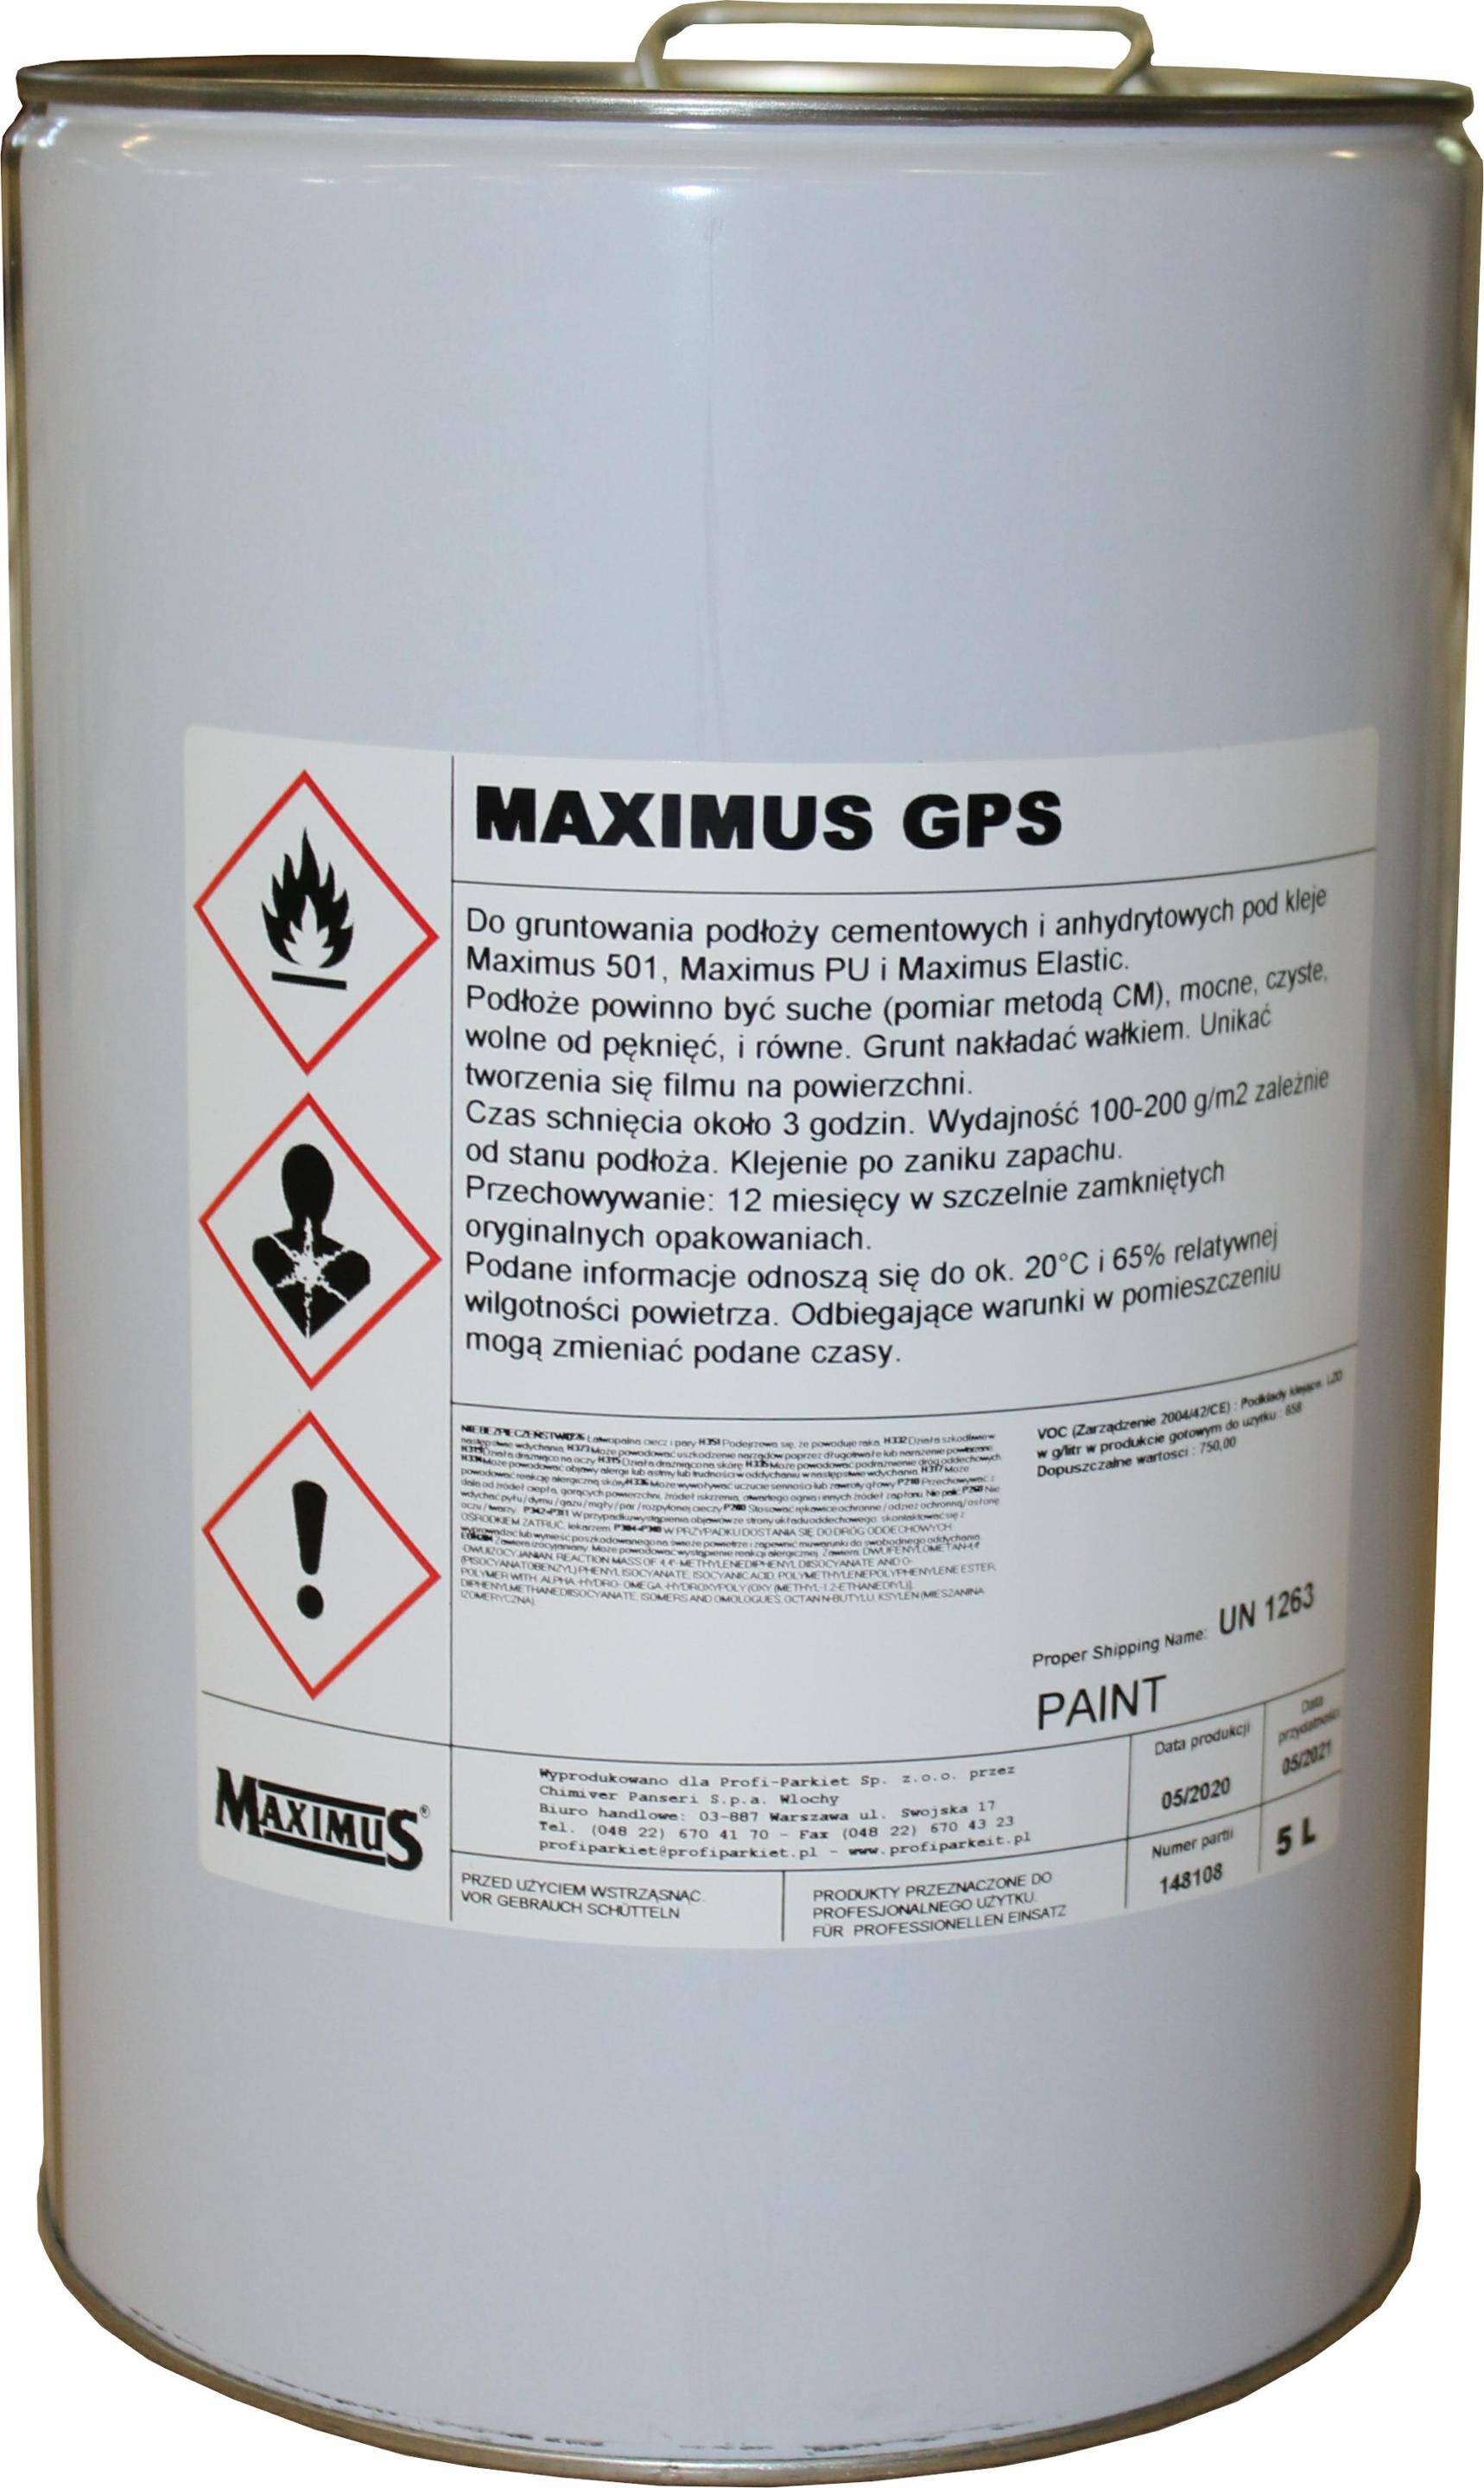 Maximus GPS (10L)